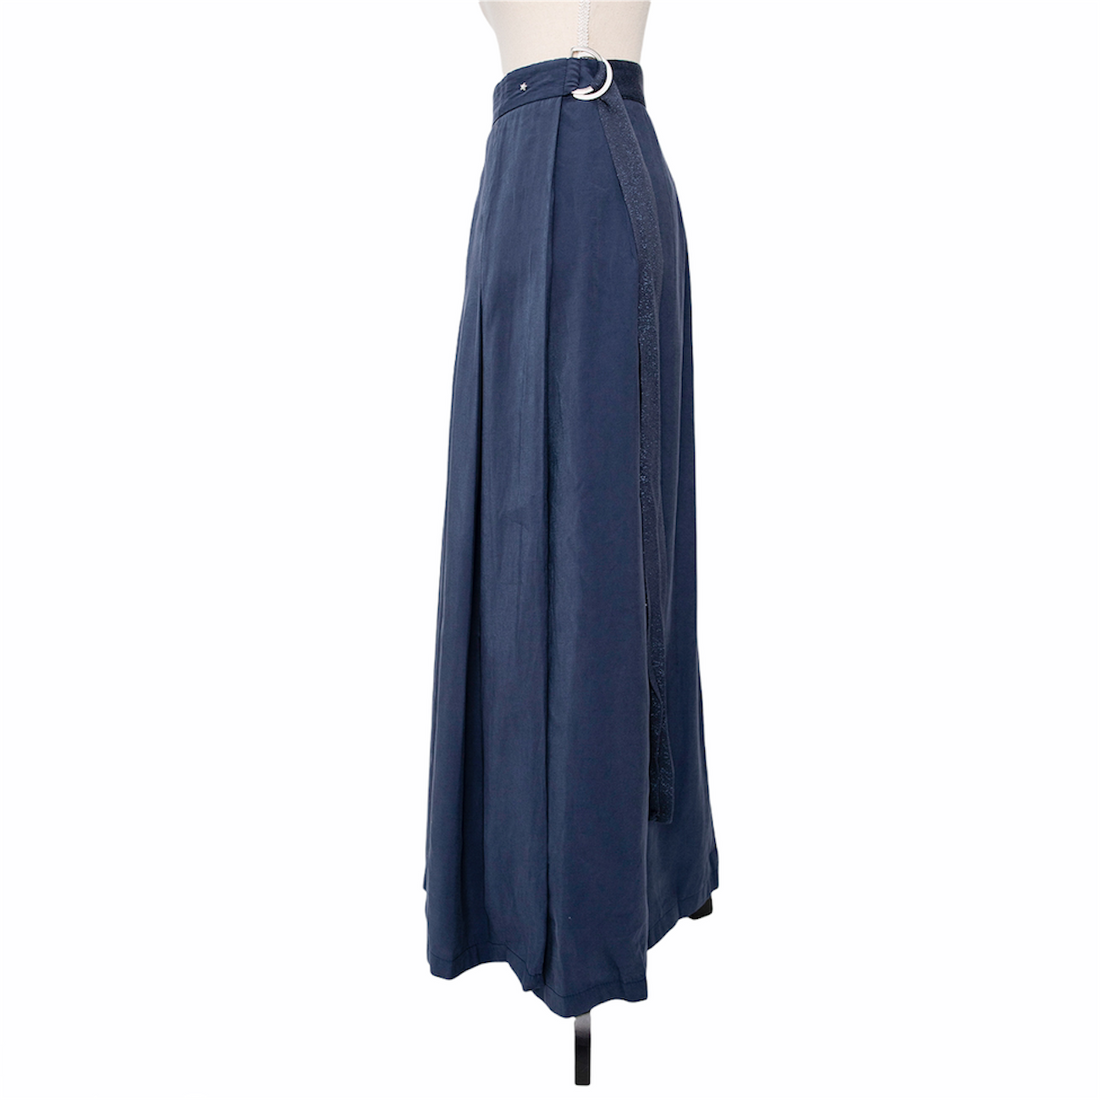 Lorena Antoniazzi Pleated midi skirt with a wrap look